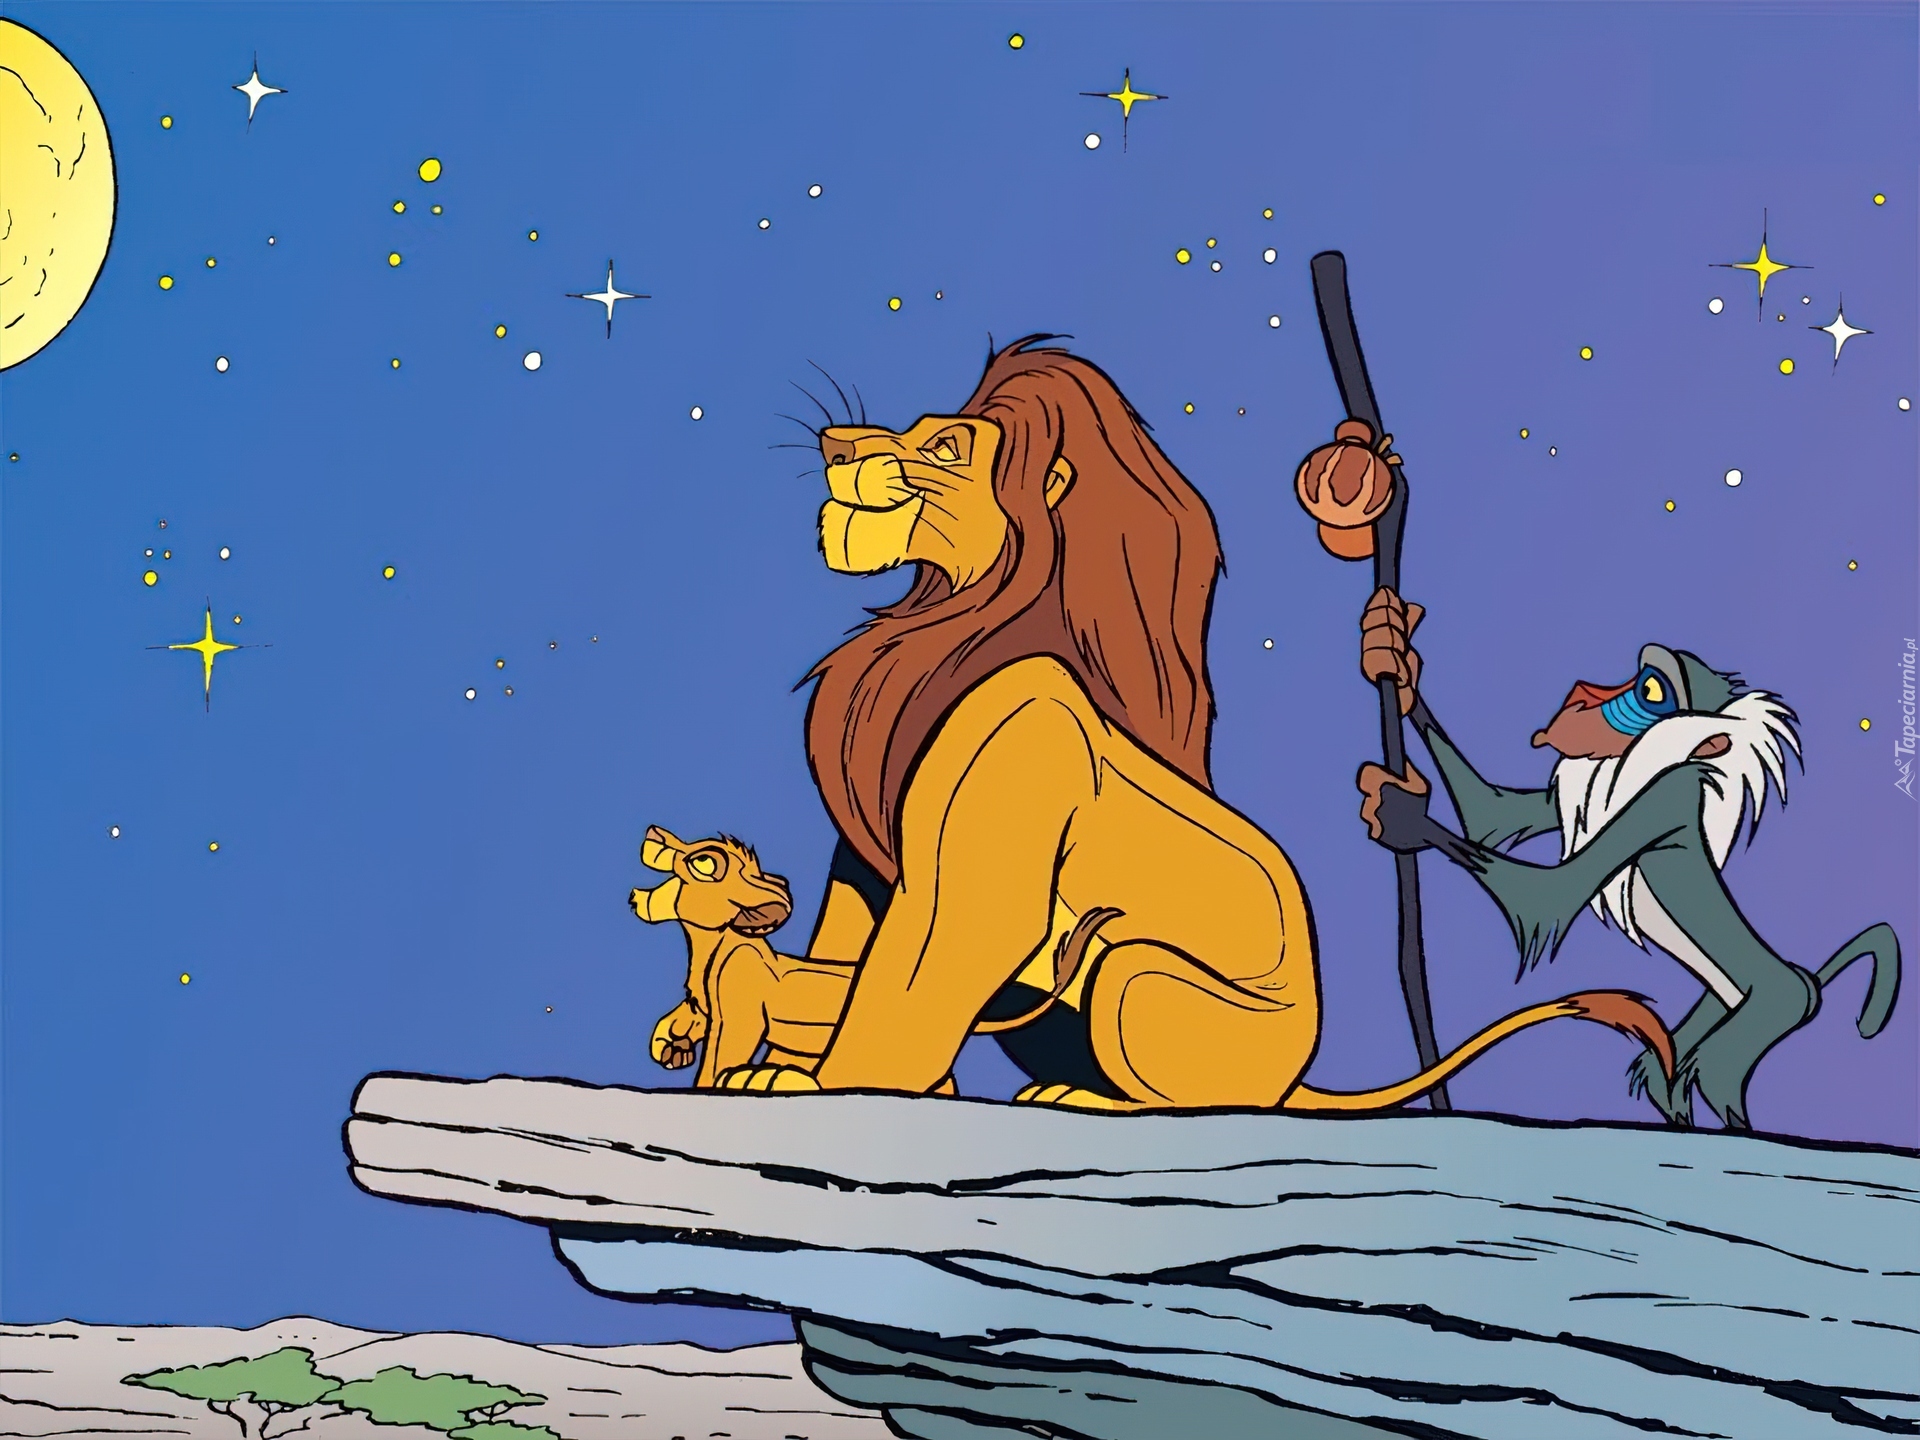 Król Lew, The Lion King, pawian, gwiazdy